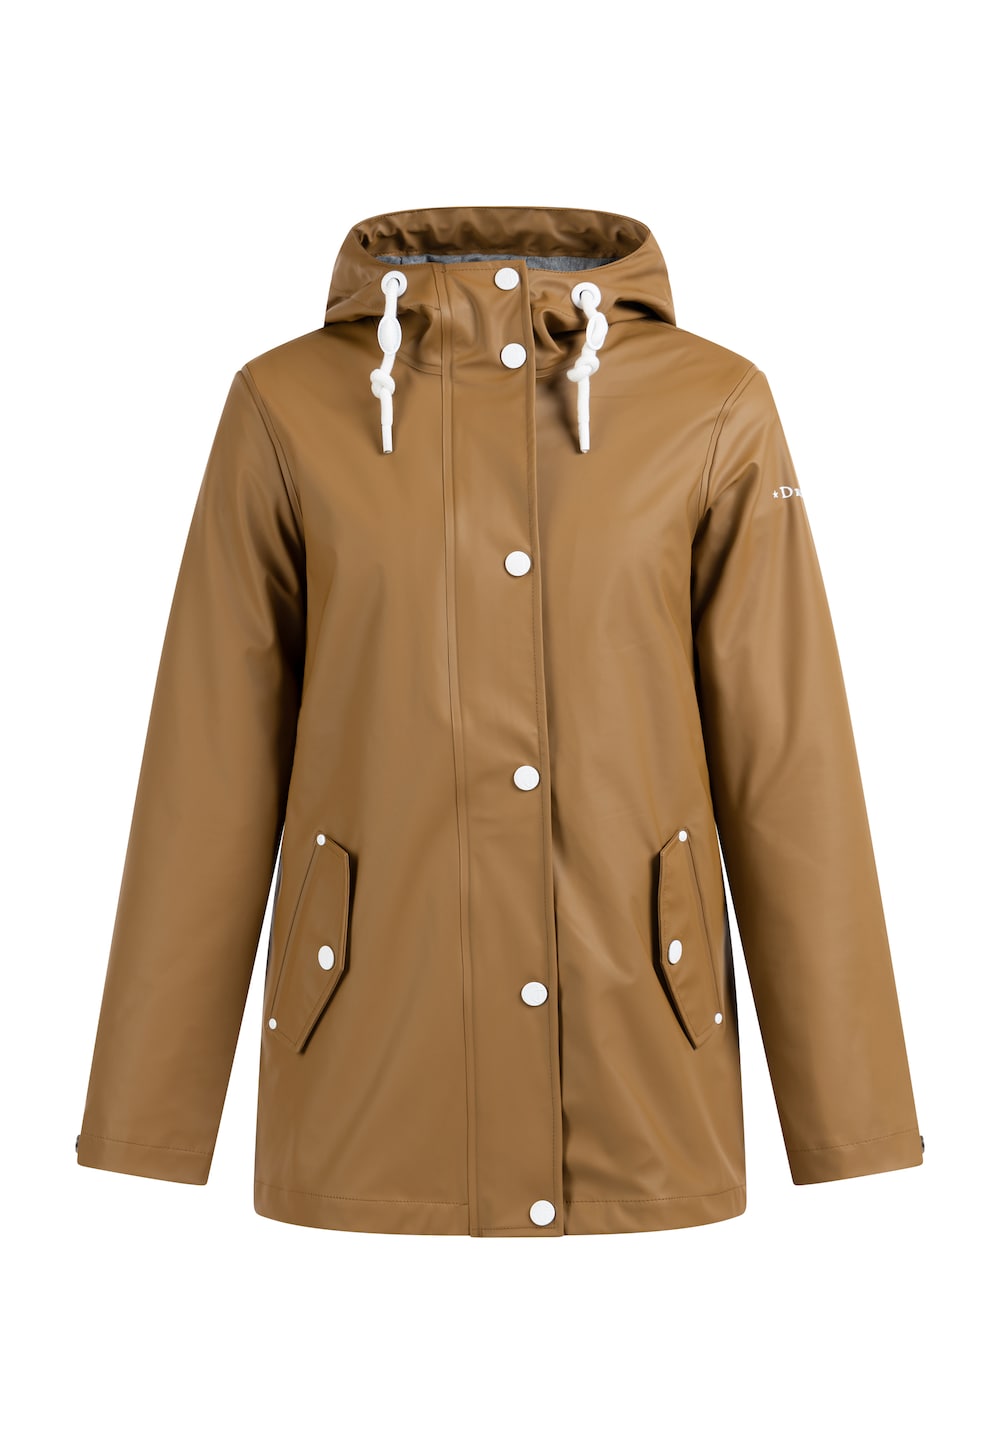 Межсезонная куртка DreiMaster Maritim, коричневый спортивная куртка dreimaster maritim оливковое